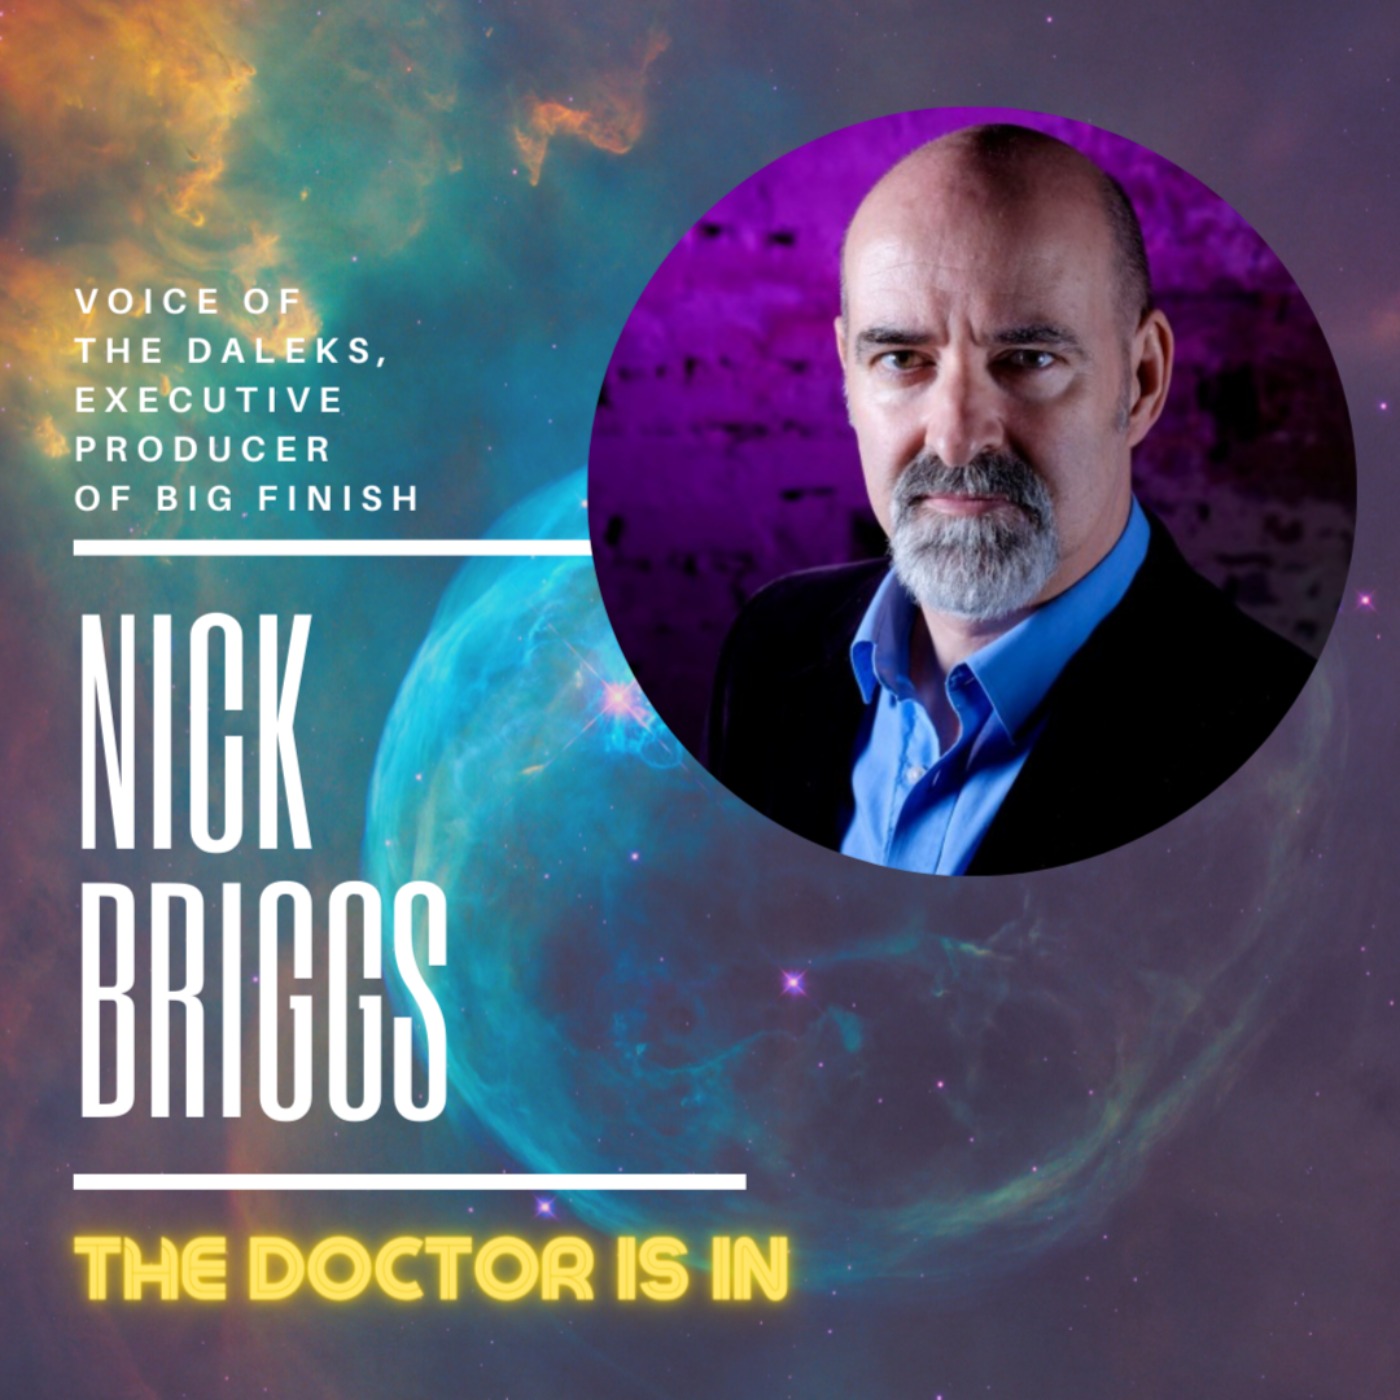 Executive Producer at Big Finish, Nick Briggs